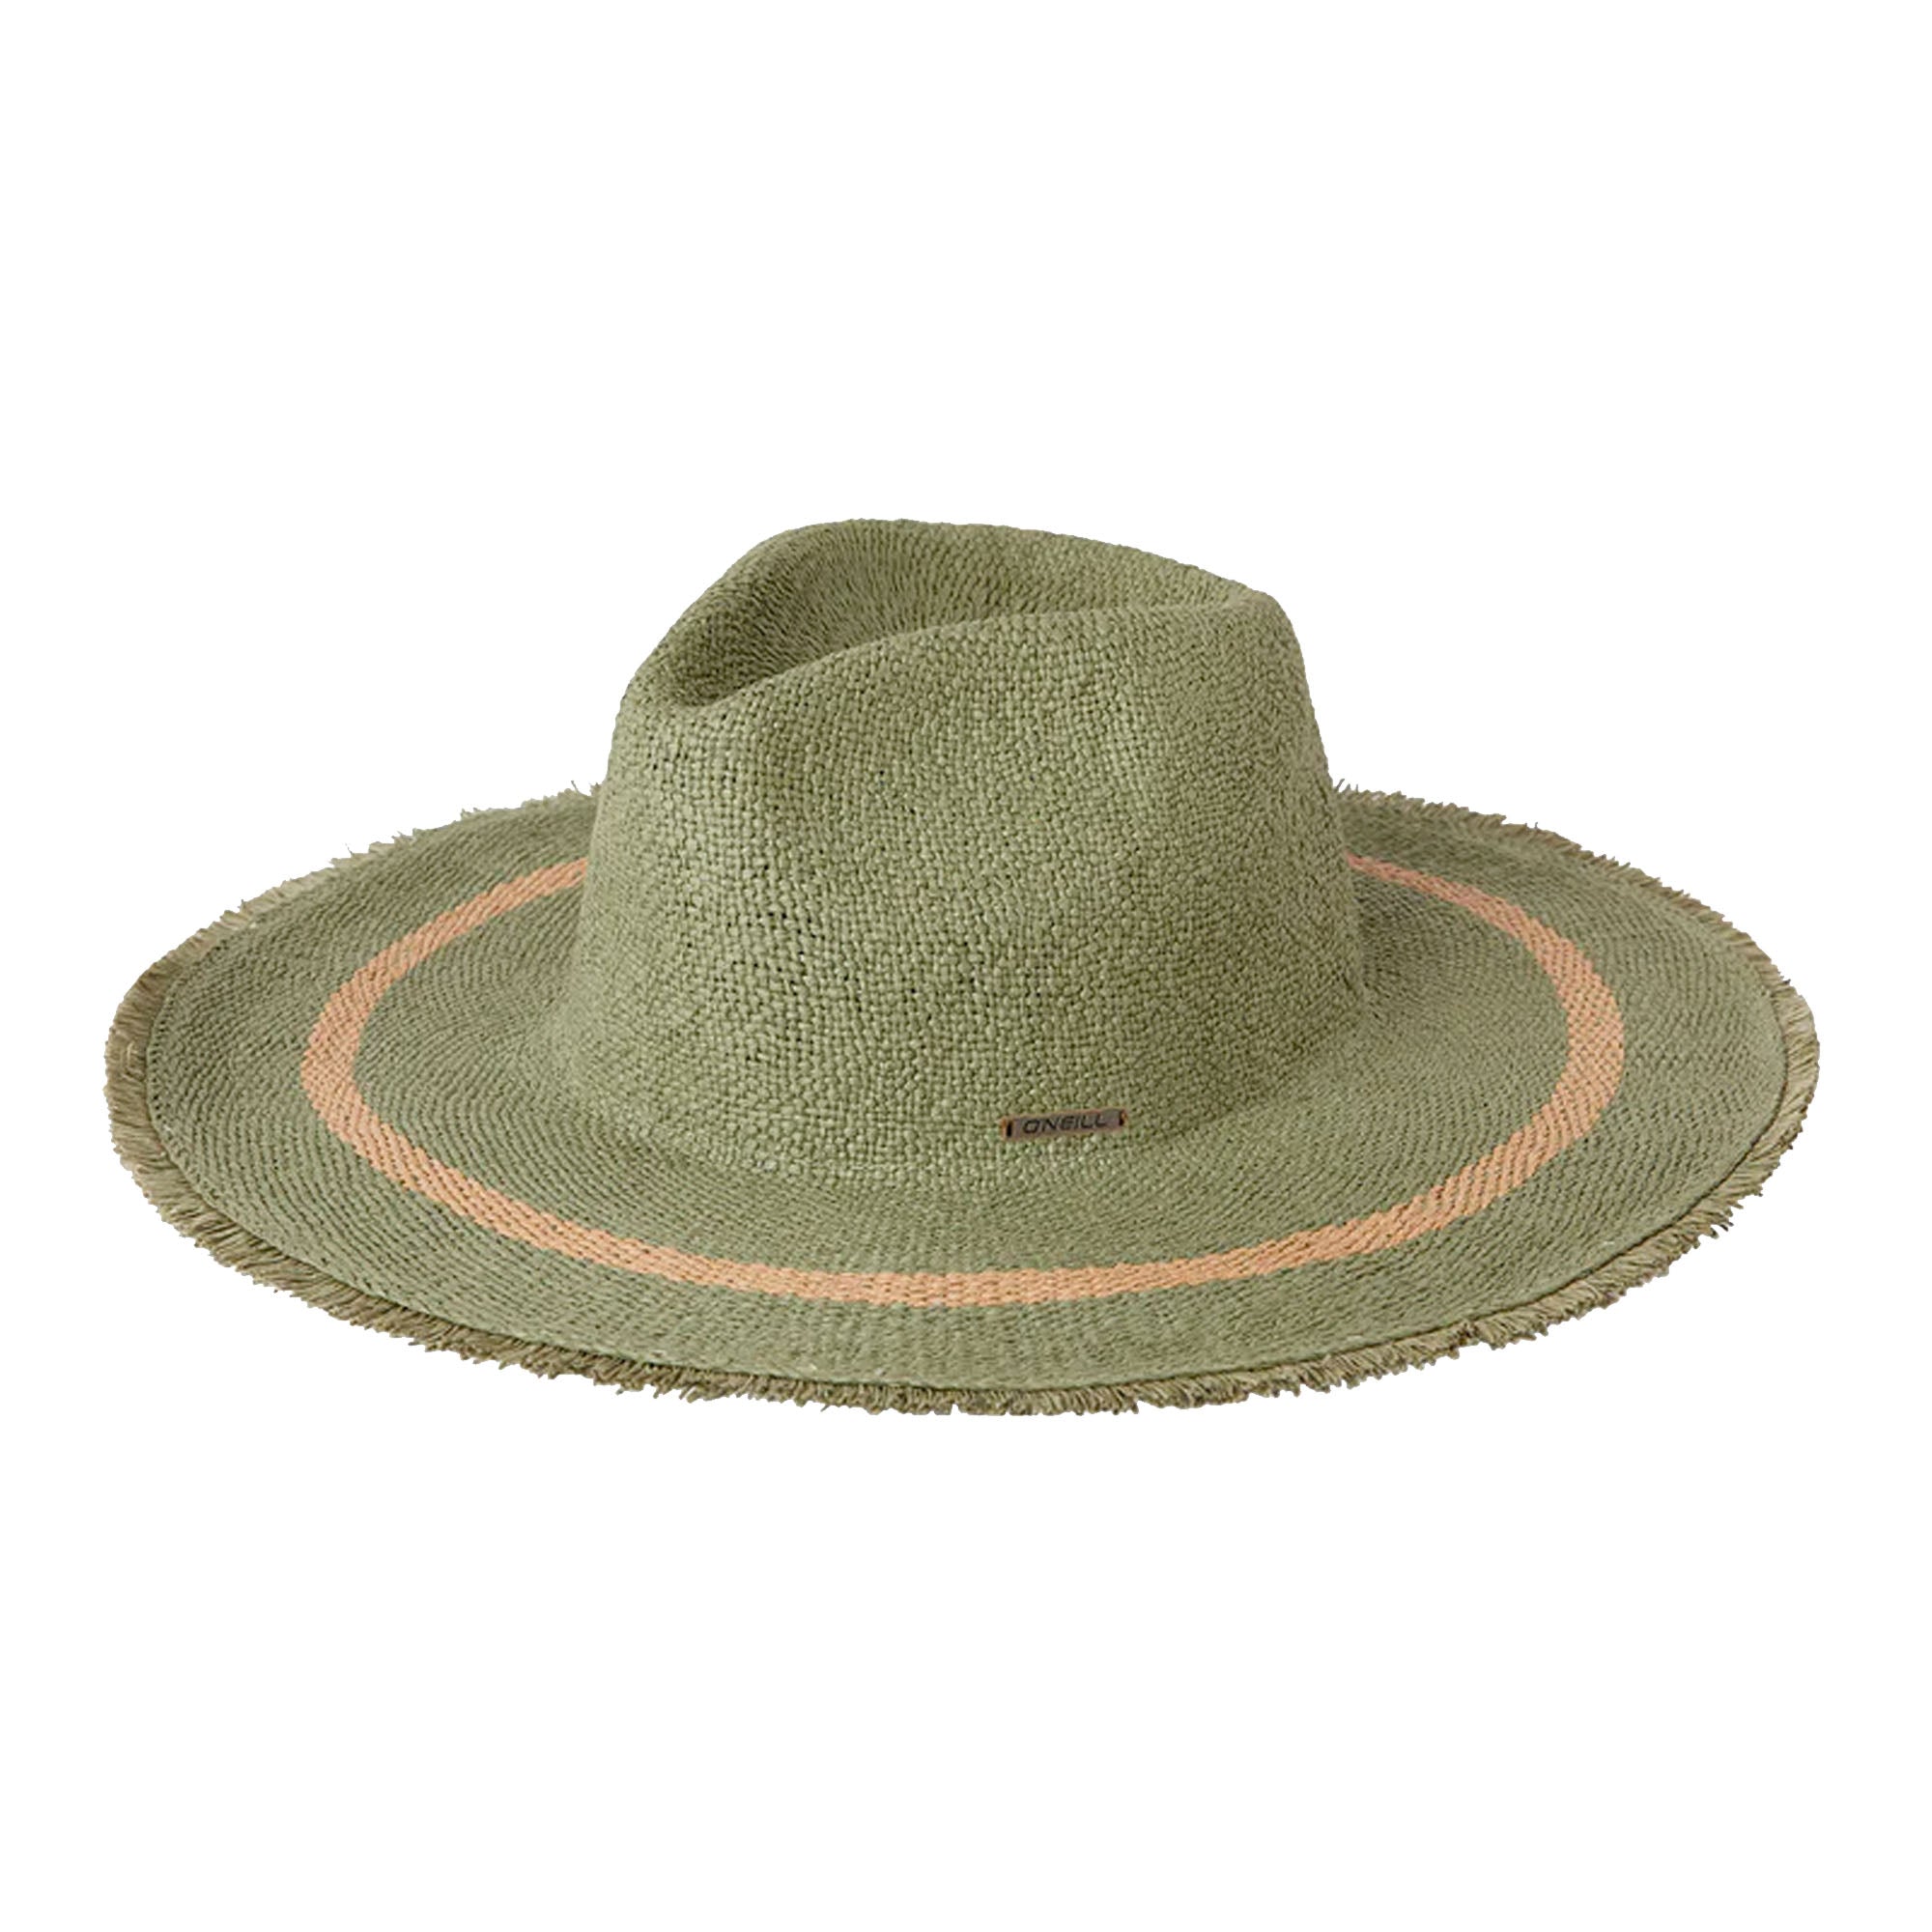 O'Neill Cove Women's Sun Hat